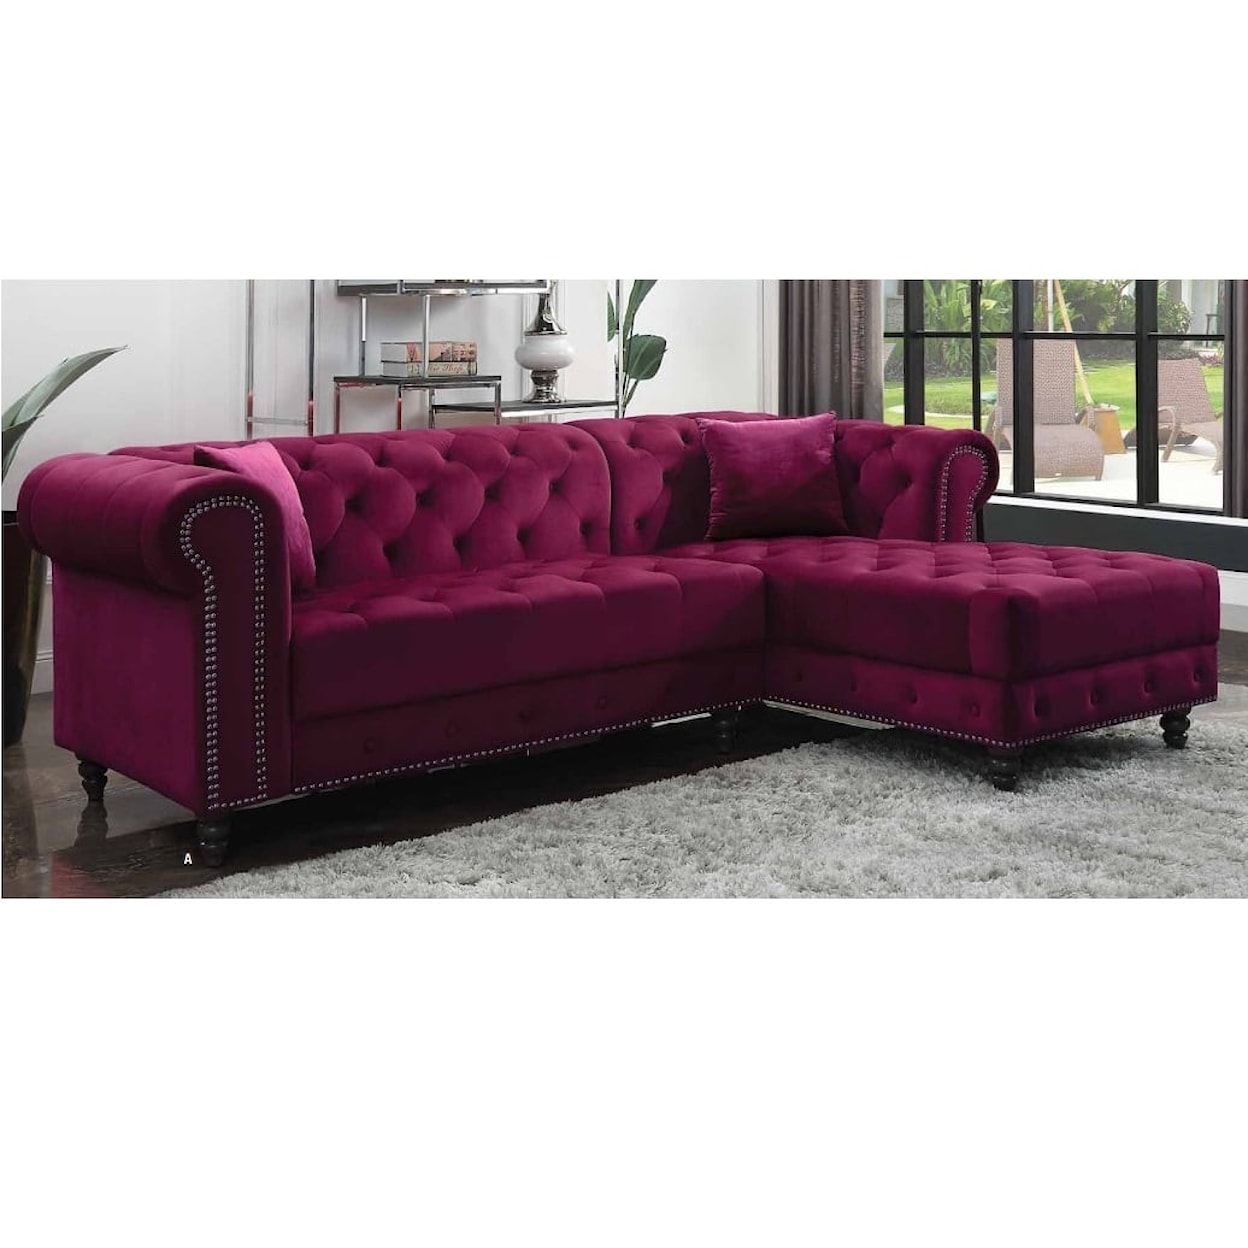 Acme Furniture Adnelis Sectional Sofa W/2 Pillows